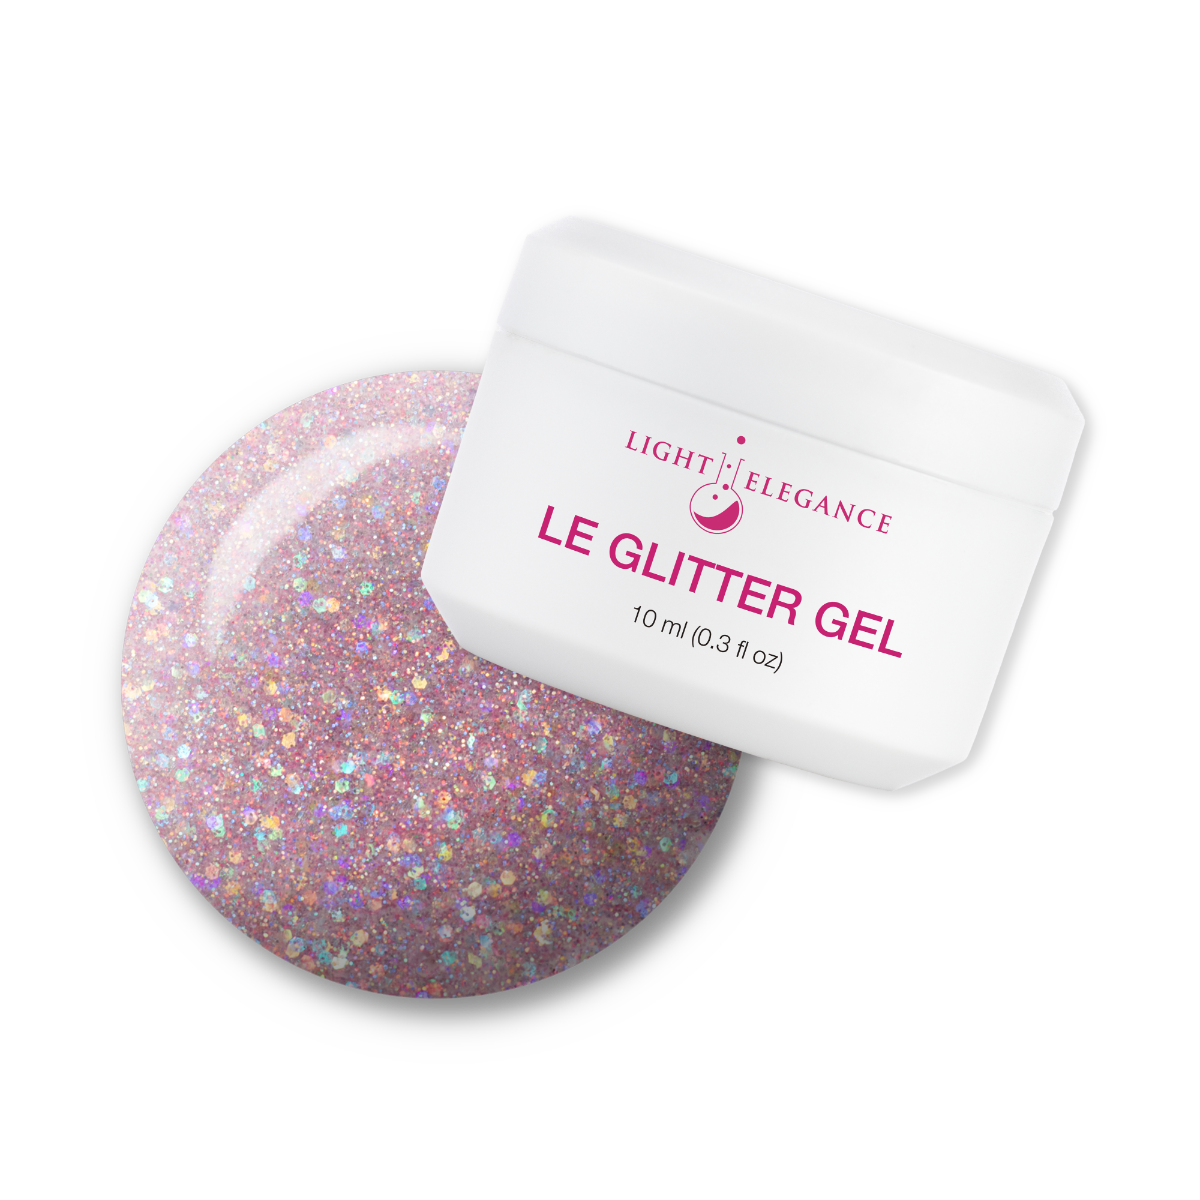 Light Elegance Glitter Gel - Free Spirit :: New Packaging - Creata Beauty - Professional Beauty Products